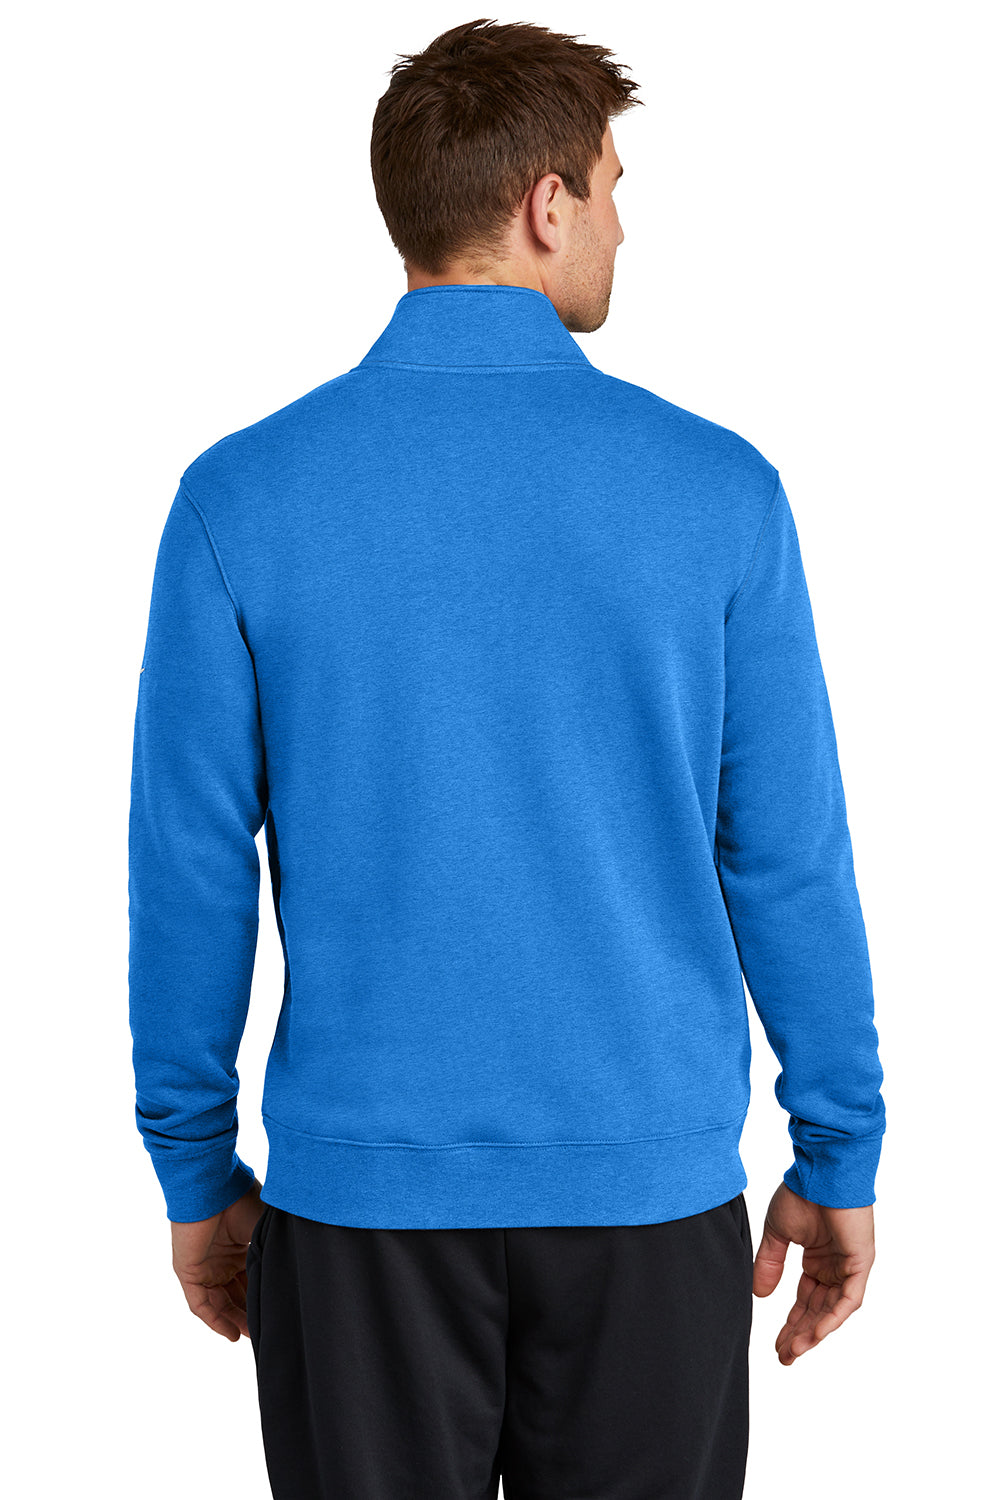 Nike NKDX6718 Mens Club Fleece 1/4 Zip Sweatshirt Heather Light Royal Blue Model Back